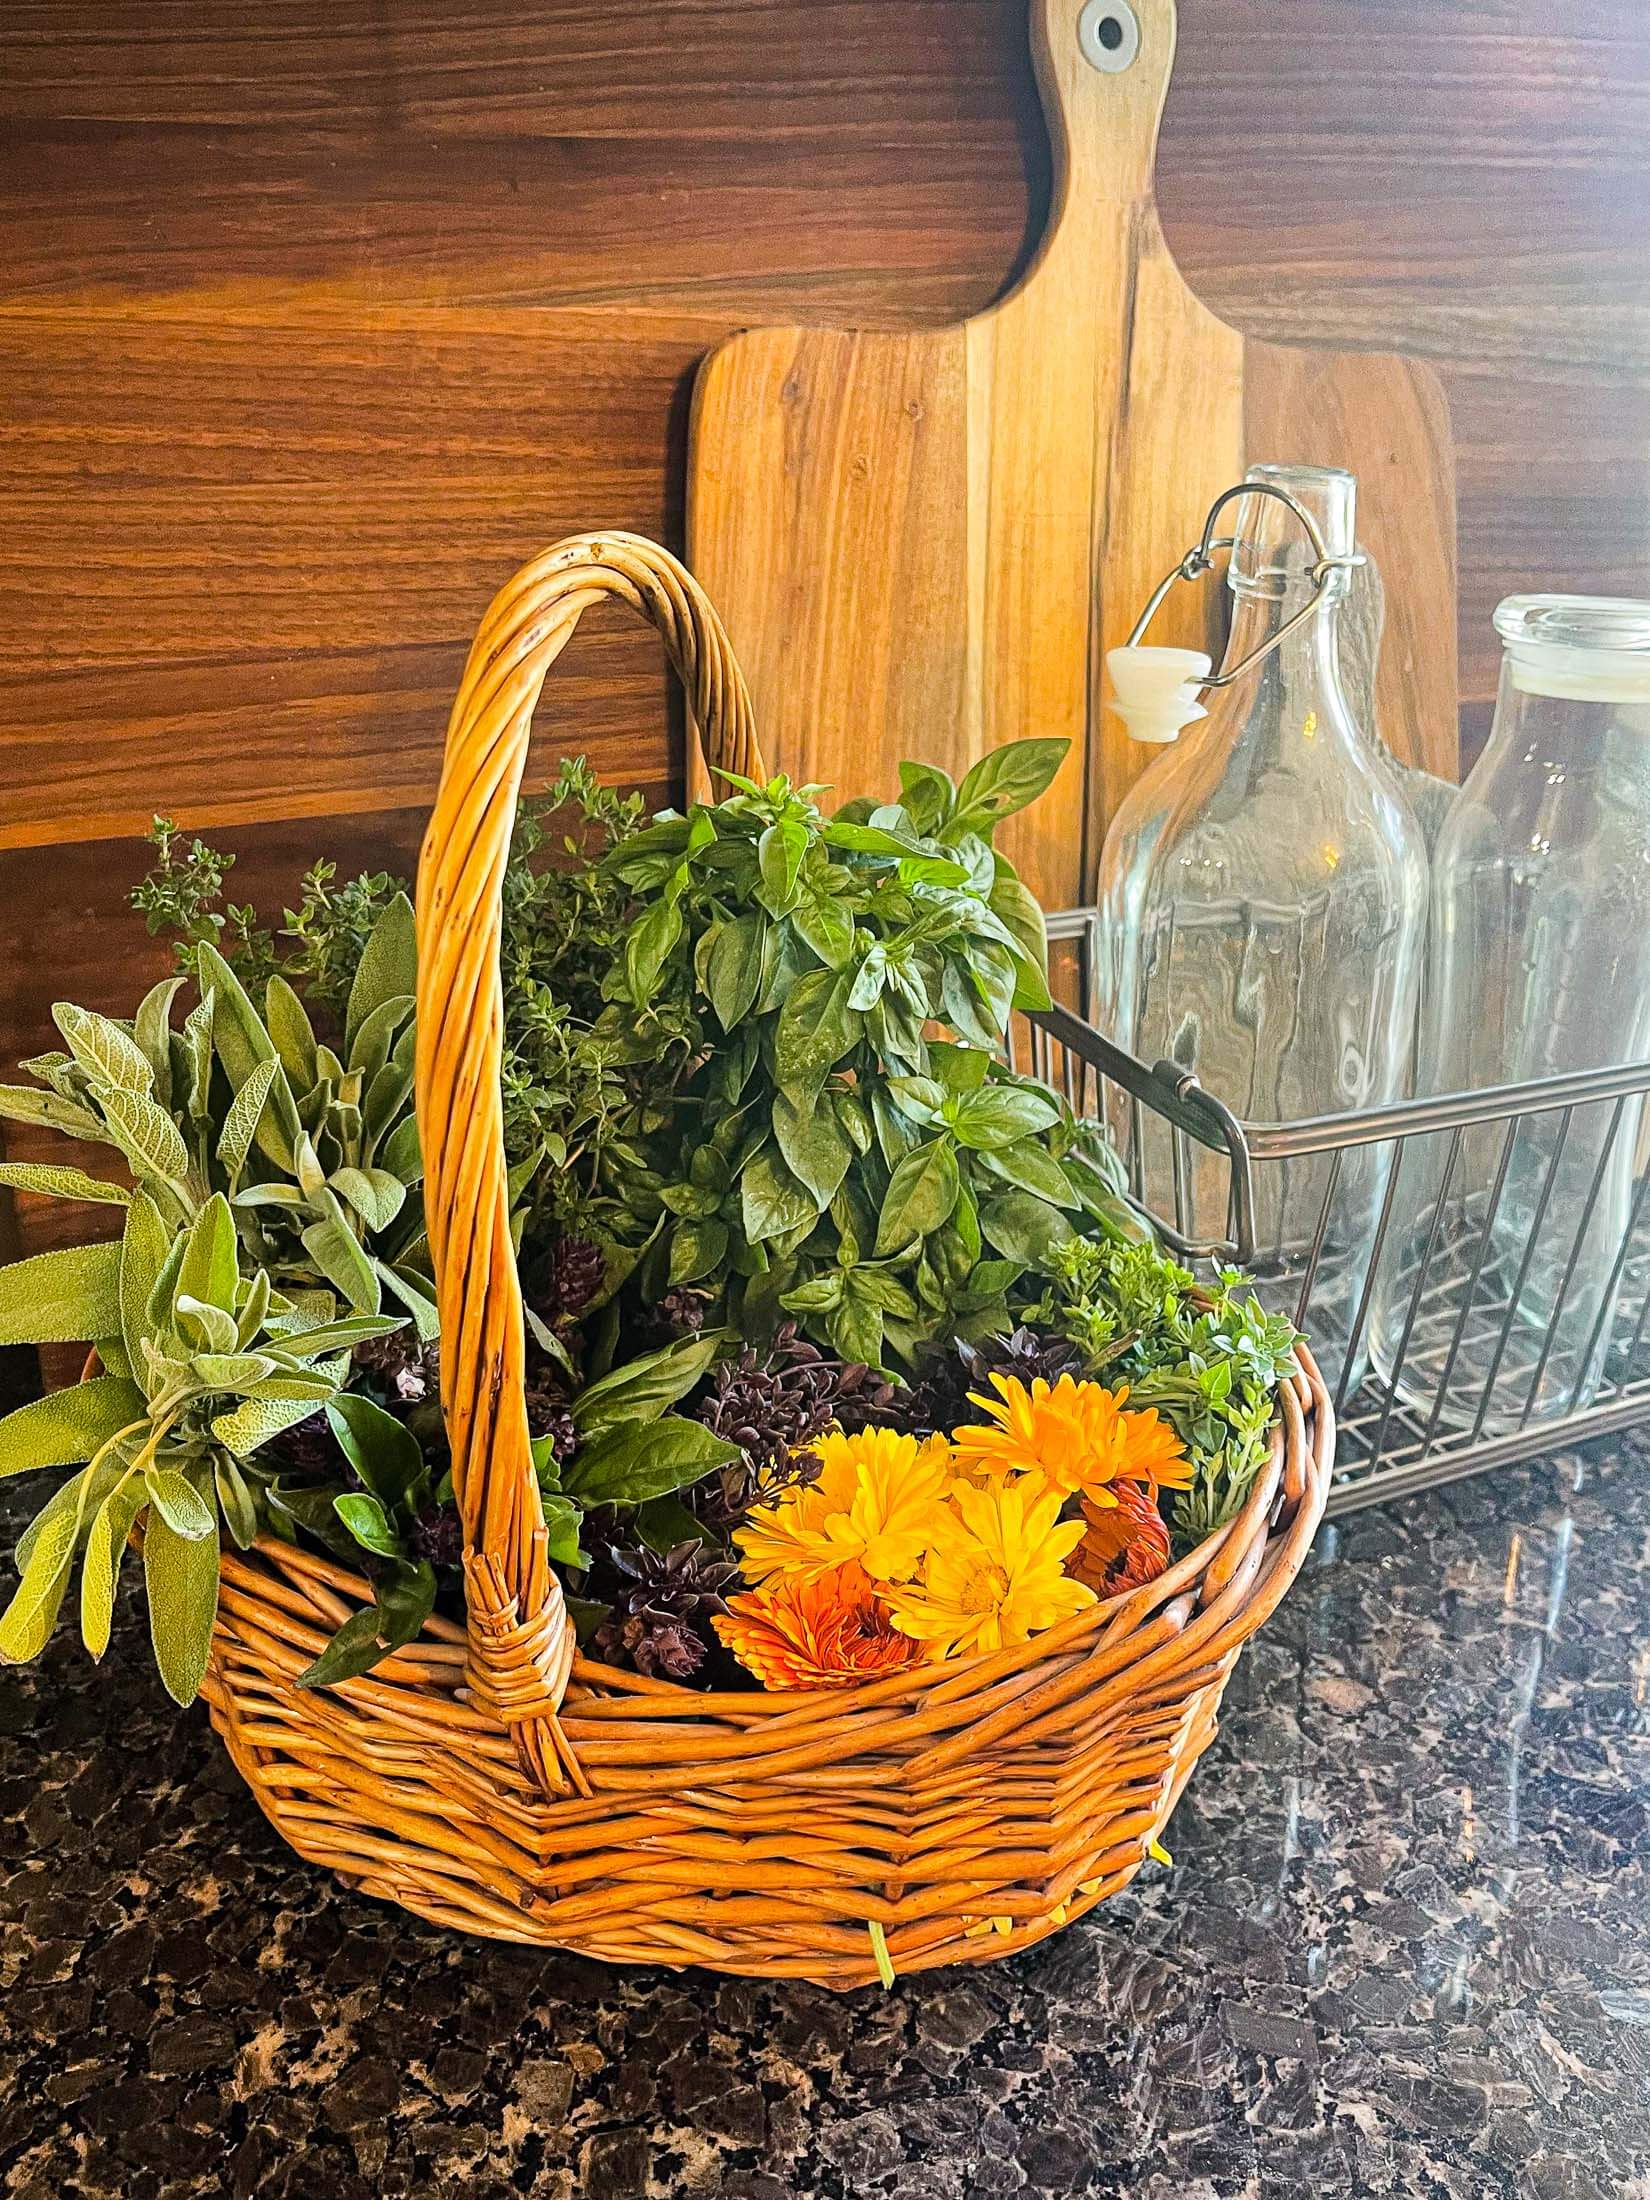 Freshly harvested herbs and calendula flowers in a wicker basket. 